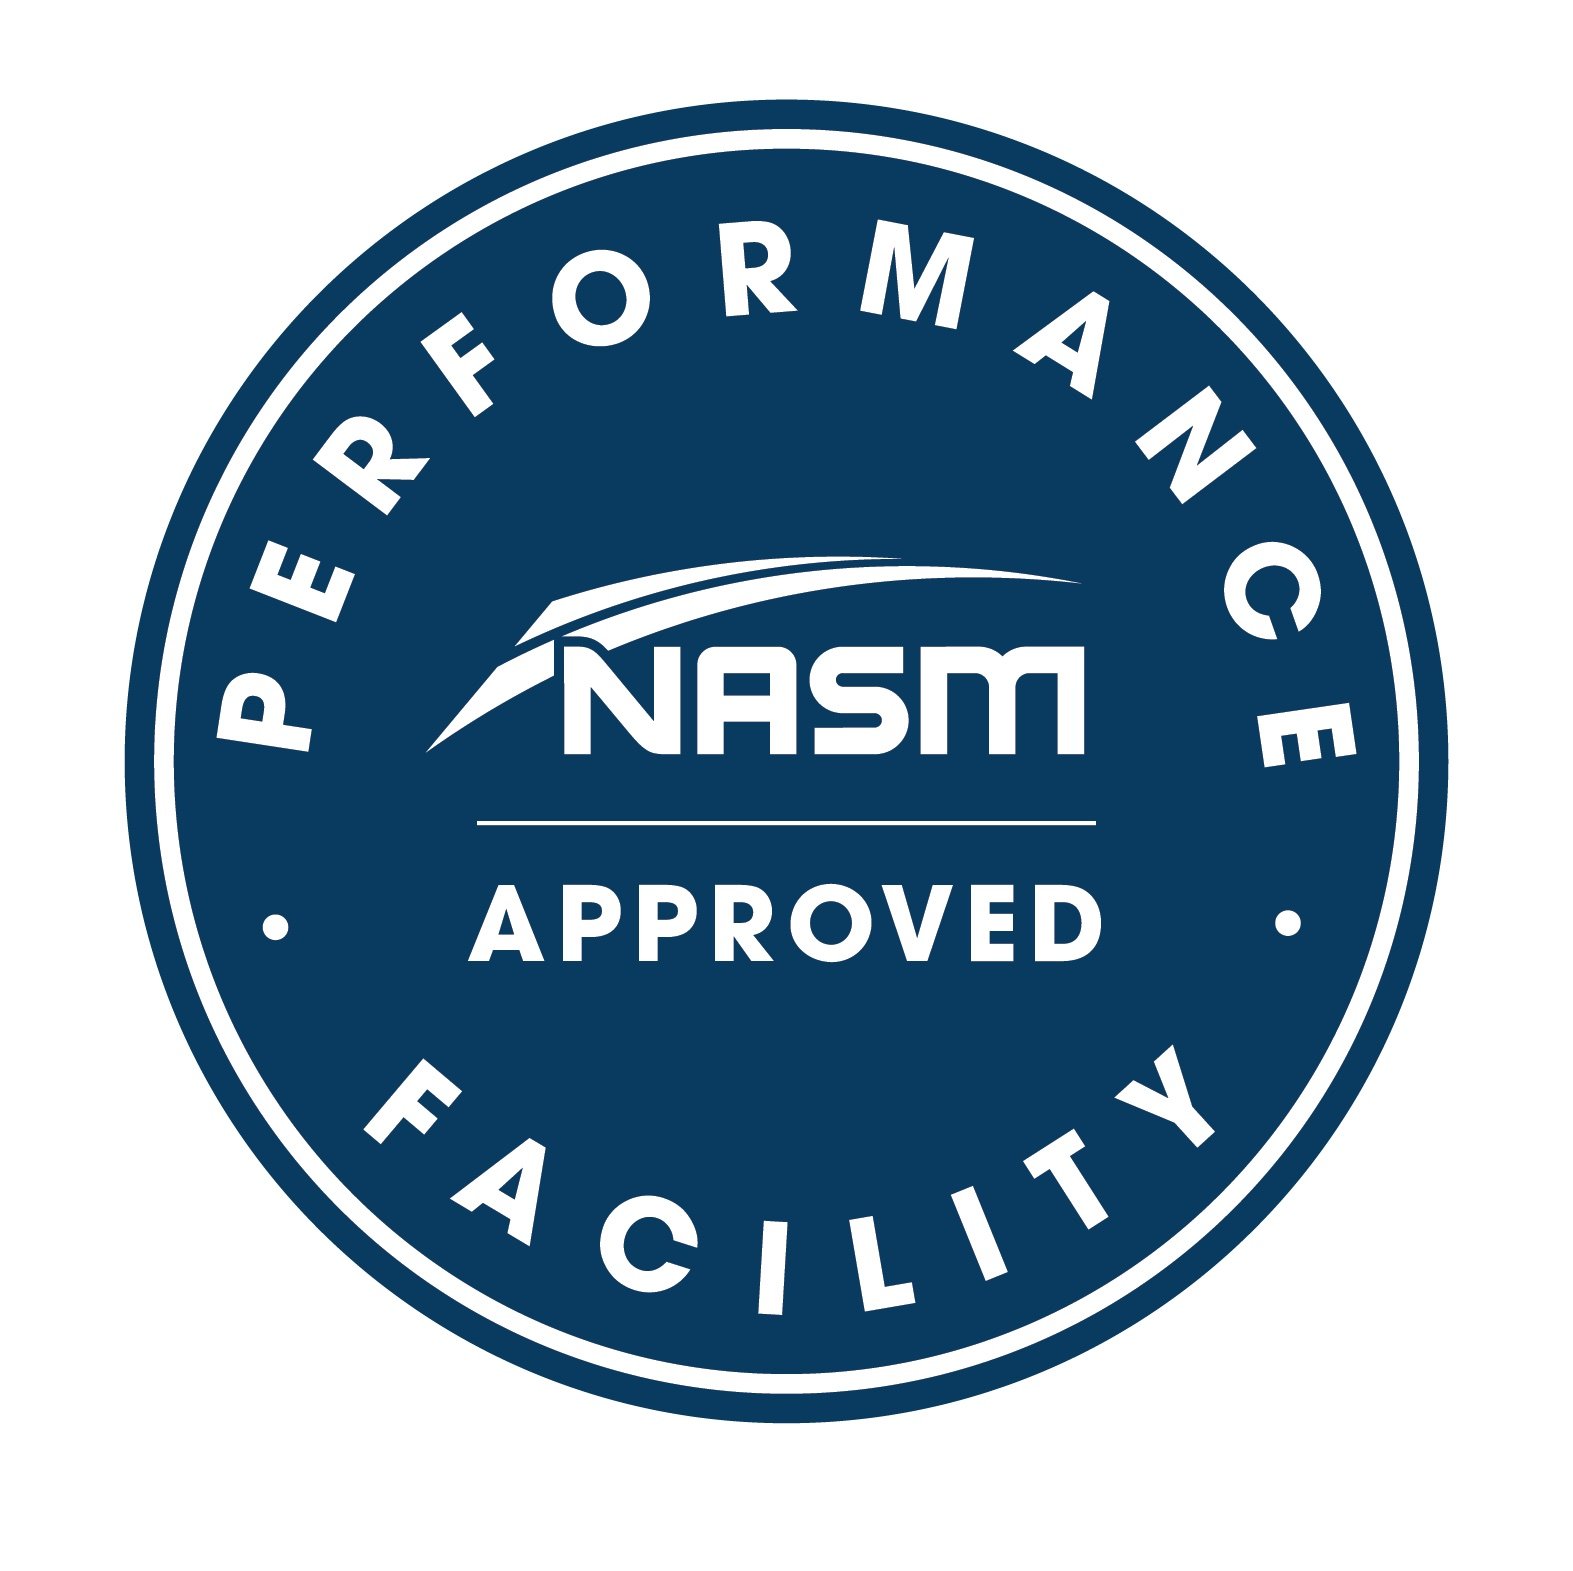 NASM PARTNER Approved Facility Seal PNG Feb 2021 (1).jpg